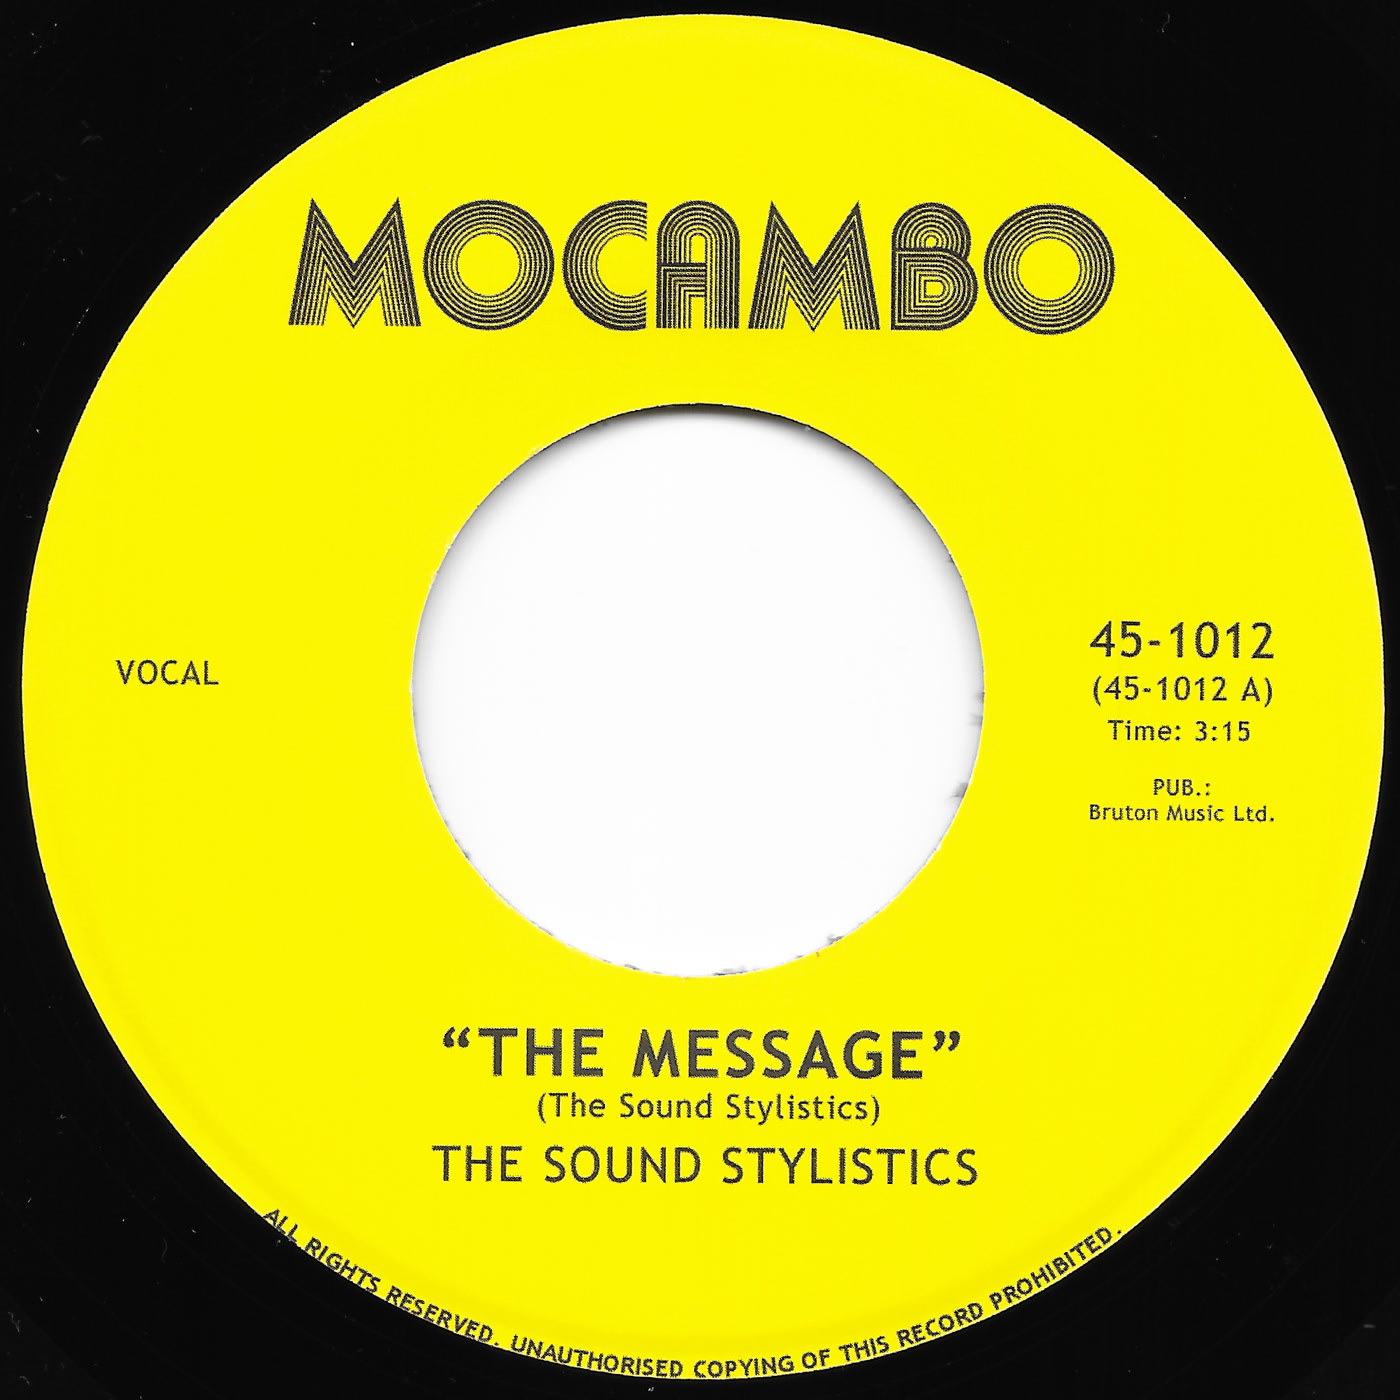 The Sound Stylistics – The Message b/w Freedom Sound (Mocambo)